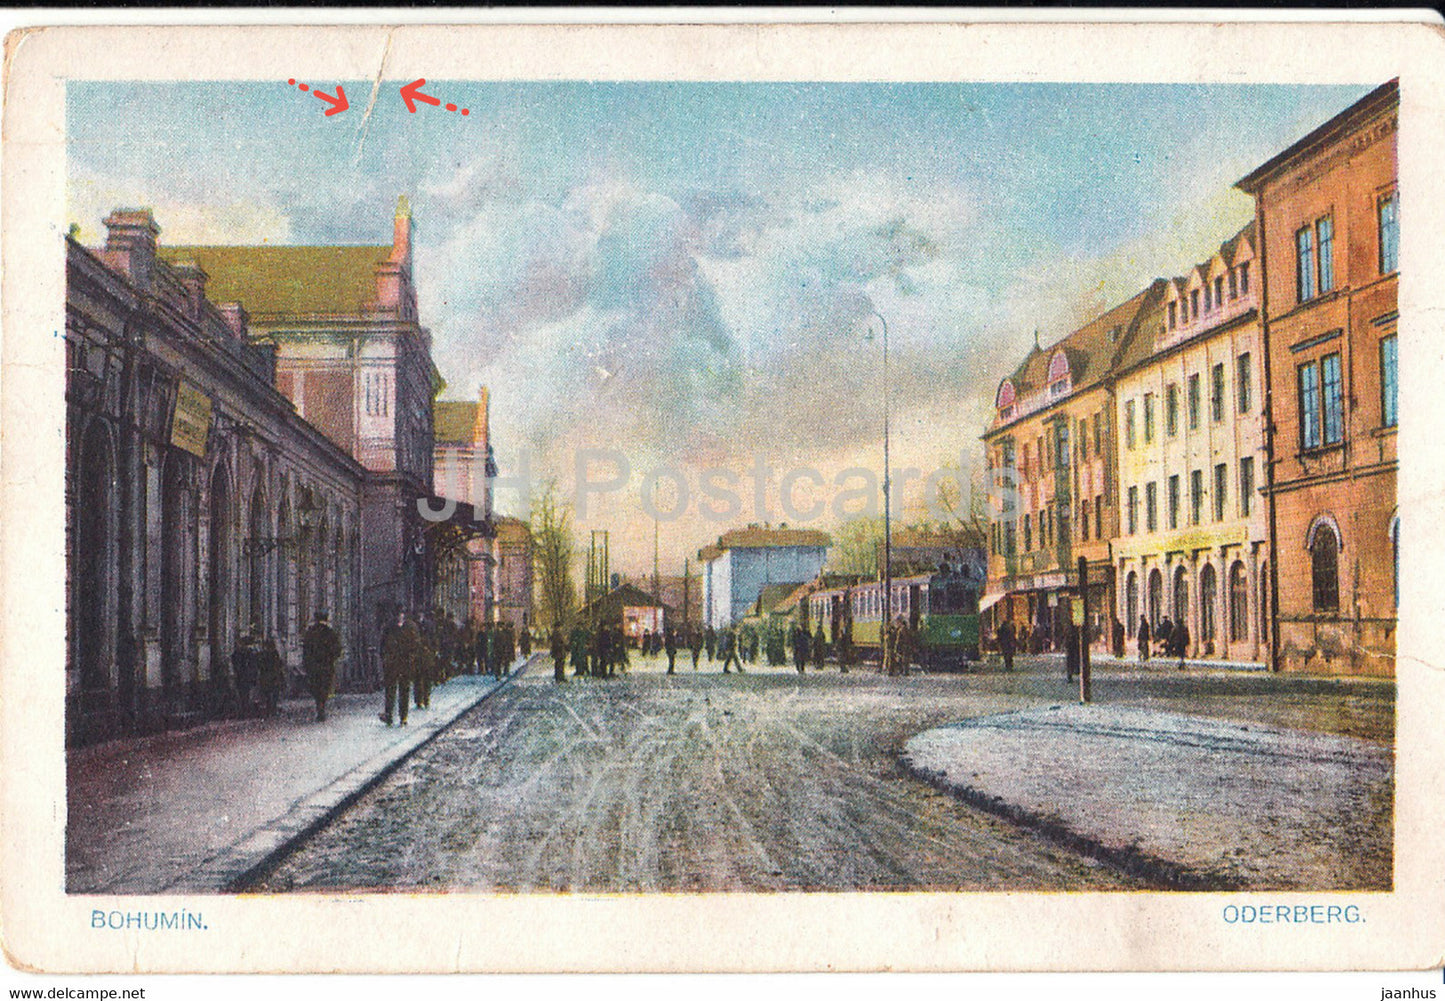 Bohumin - Oderberg - tram - old postcard - Czech Republic - Czechoslovakia - used - JH Postcards